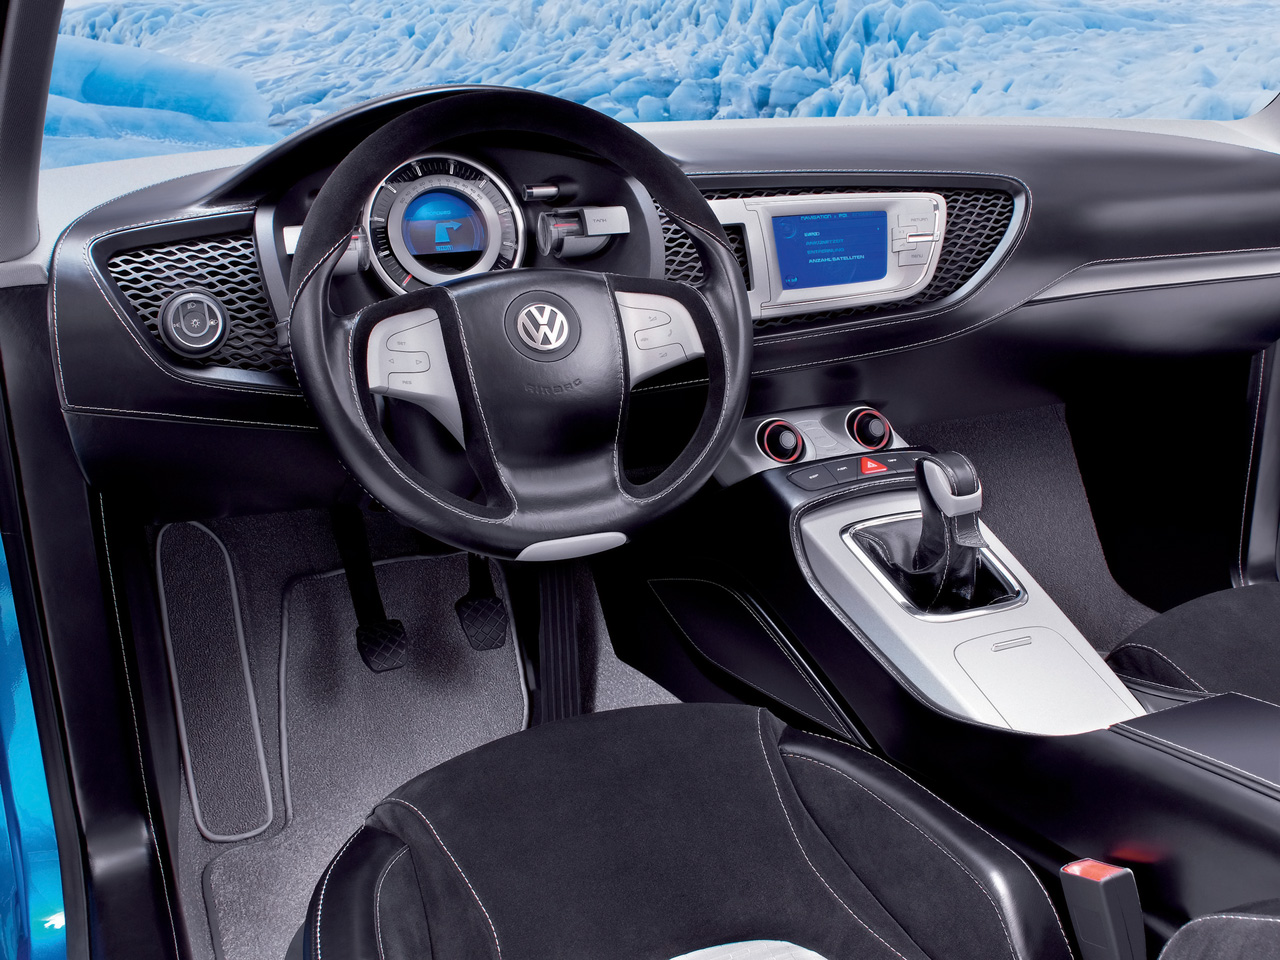 Volkswagen Concept A Backgrounds, Compatible - PC, Mobile, Gadgets| 1280x960 px